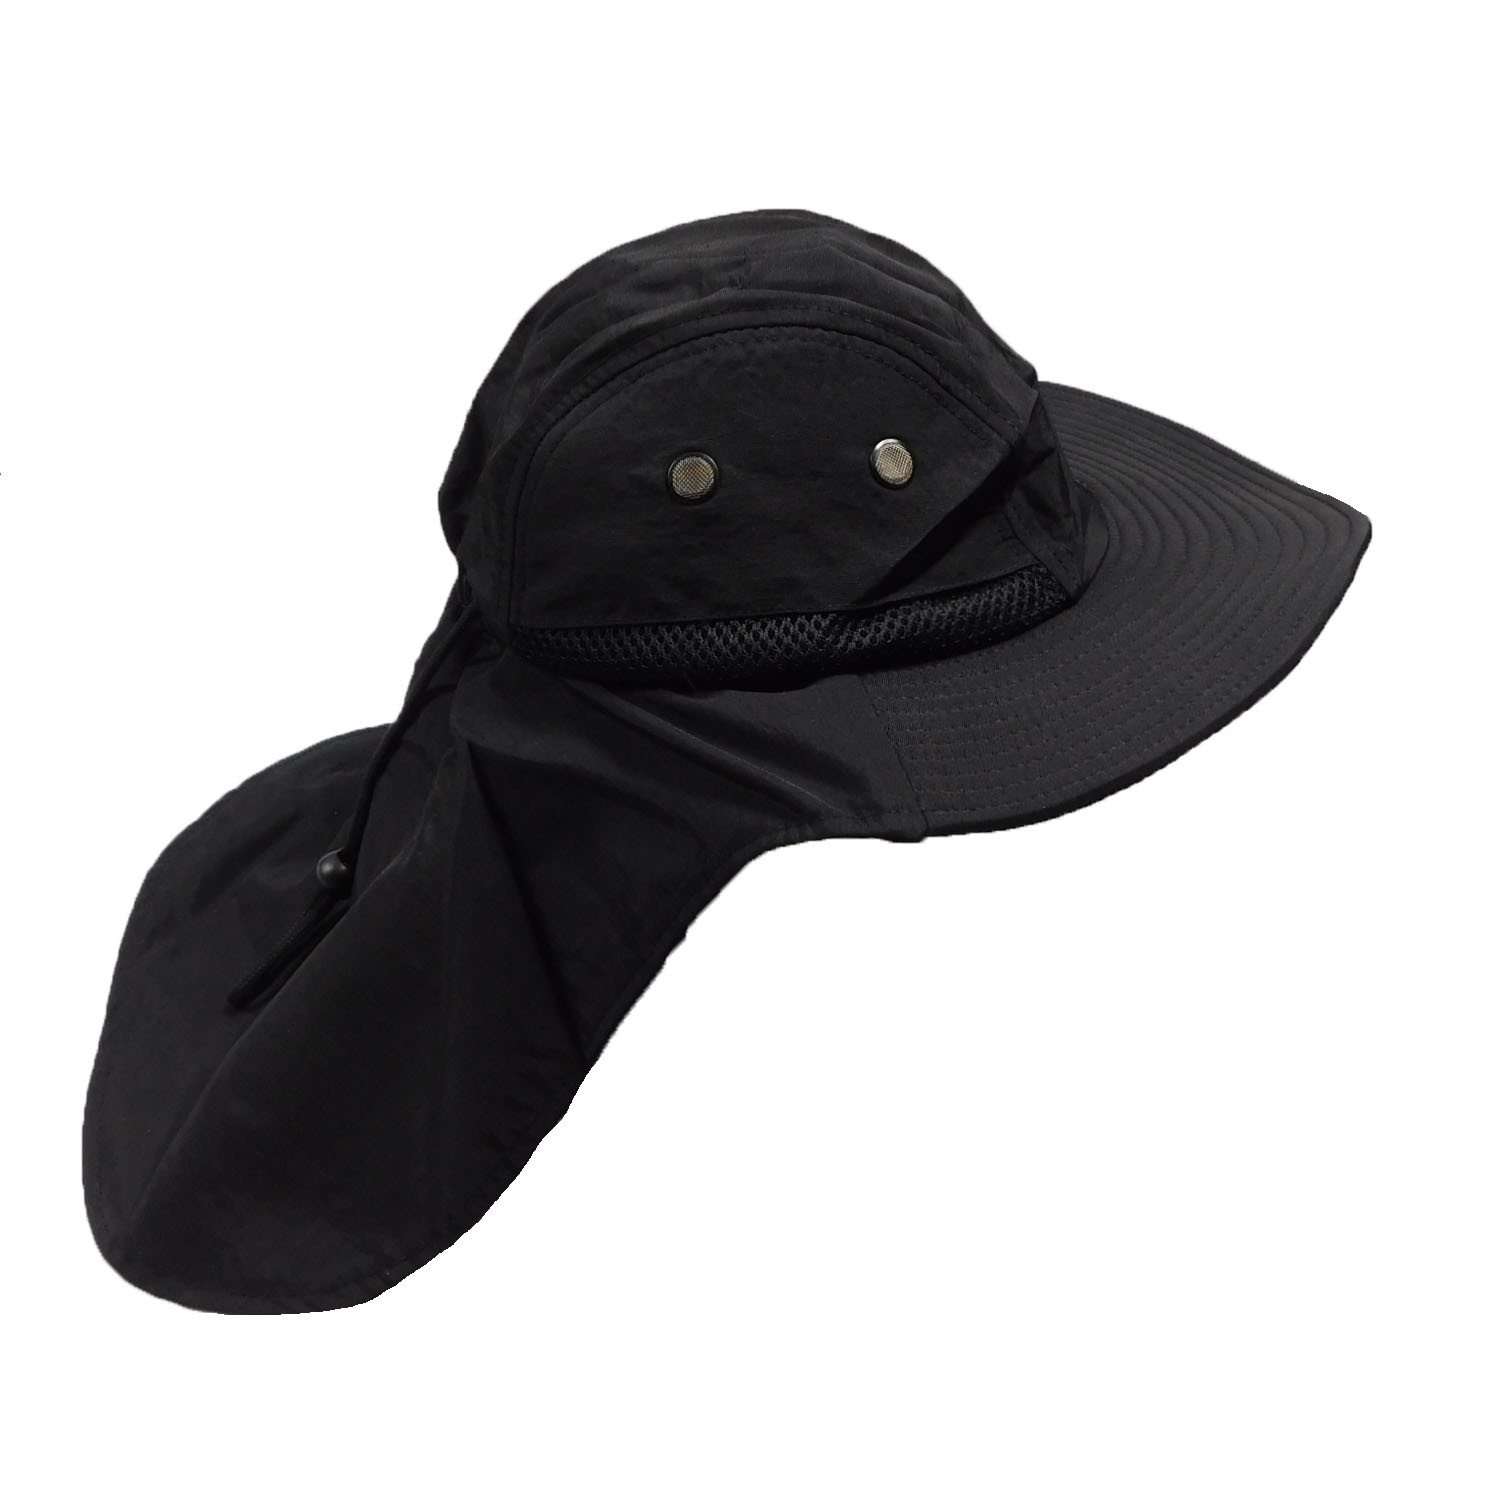 Platypus Fishing Lines Black Cap - Fishing Hat with Adjustable